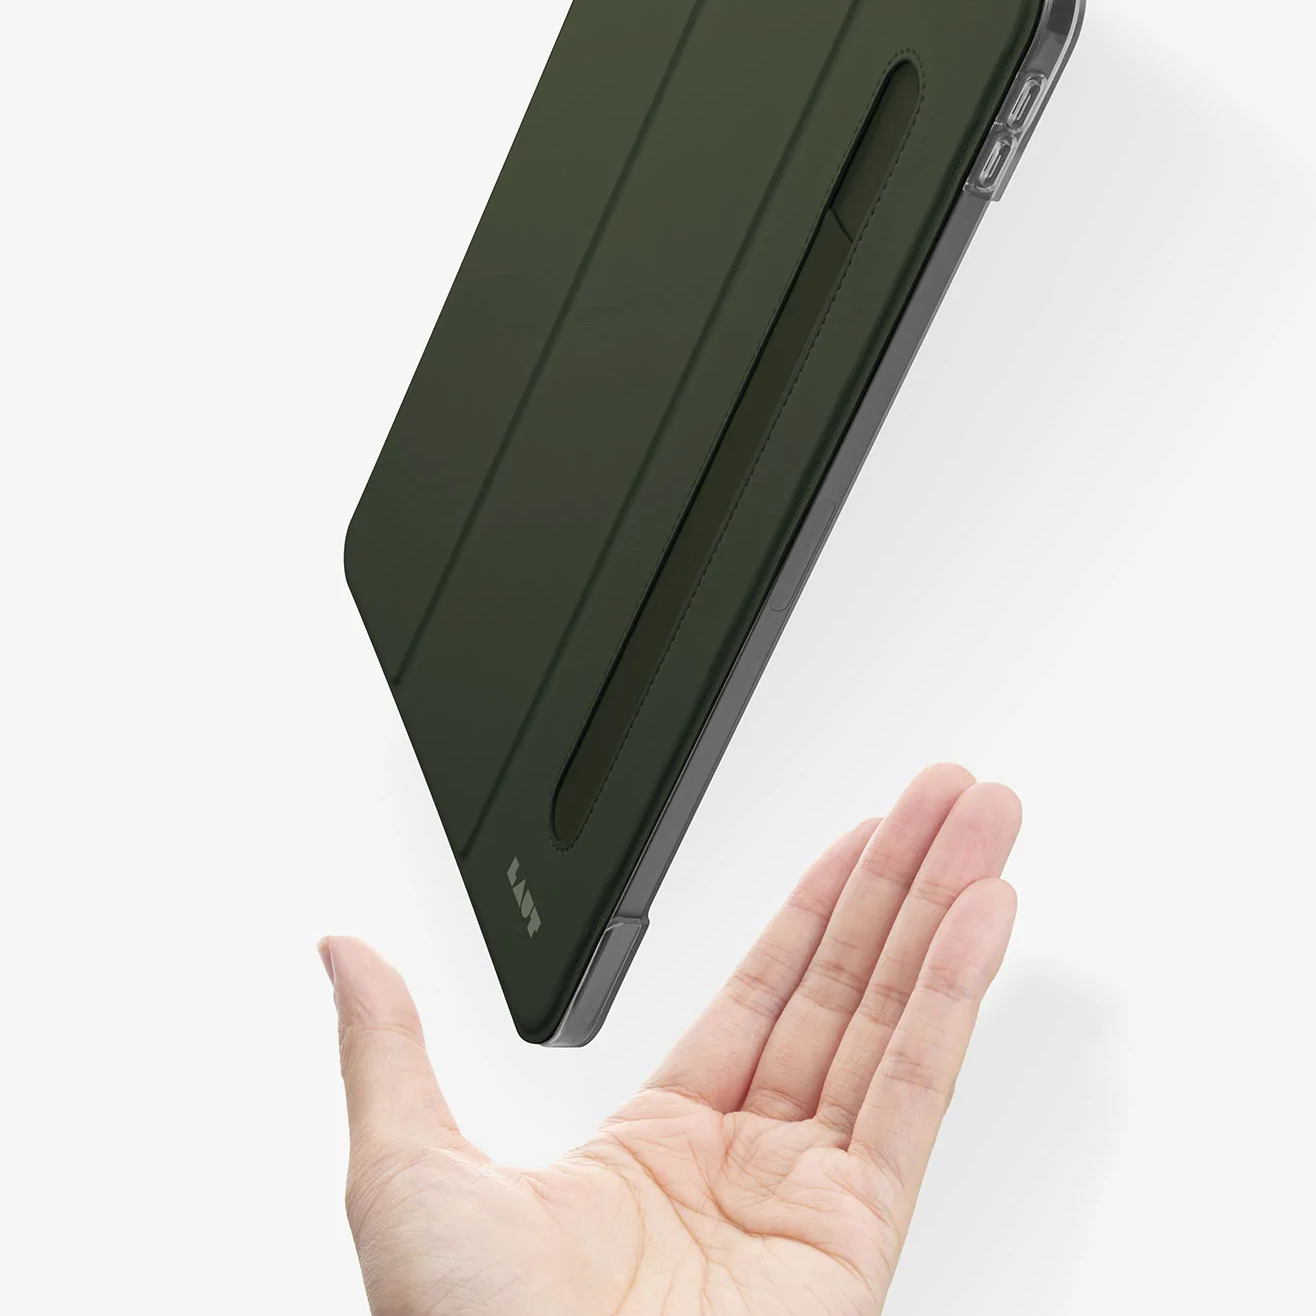 LAUT PRESTIGE Folio 軍規蜂巢 2017 iPad Pro 10.5 吋 耐衝擊含筆槽保護套, 灰